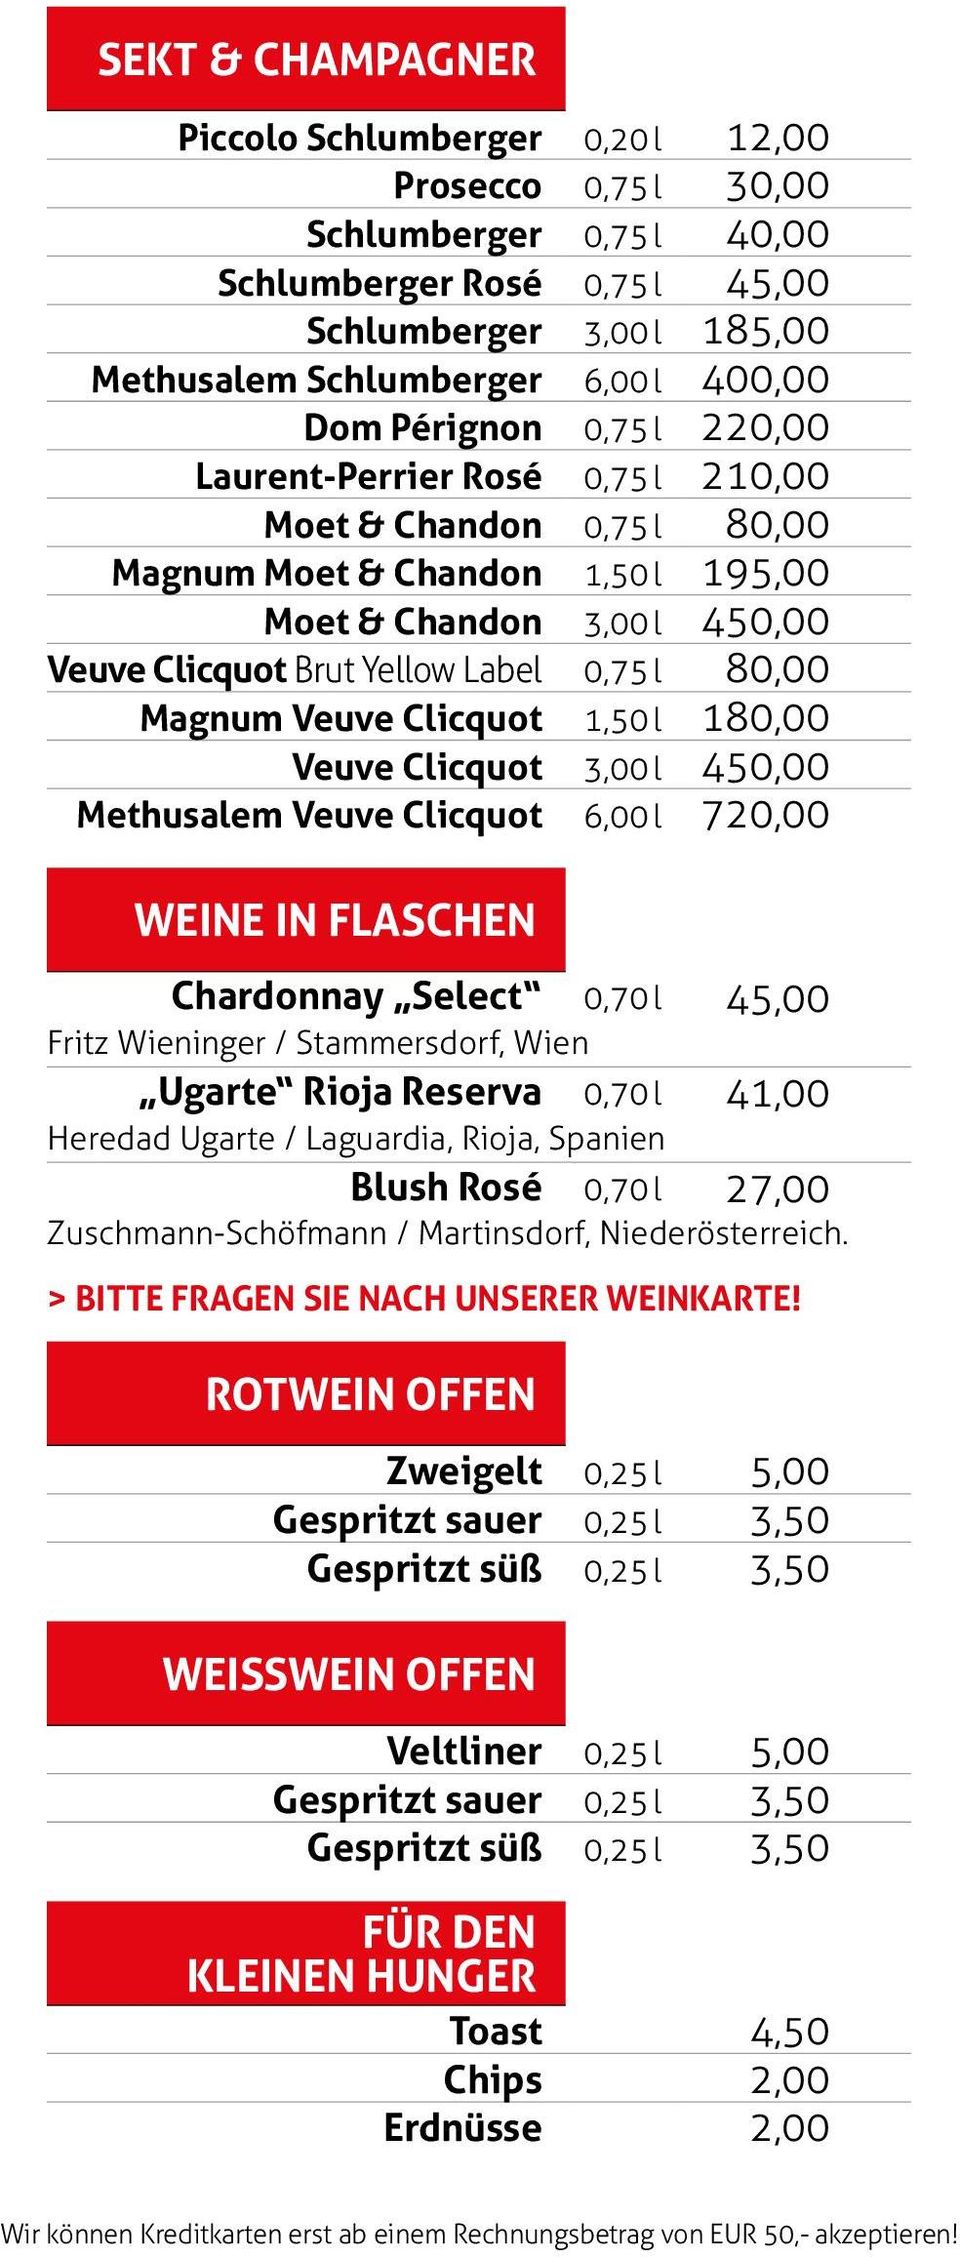 Magnum Veuve Clicquot 1,50 l 180,00 Veuve Clicquot 3,00 l 450,00 Methusalem Veuve Clicquot 6,00 l 720,00 Weine in Flaschen Chardonnay Select 0,70 l 45,00 Fritz Wieninger / Stammersdorf, Wien Ugarte